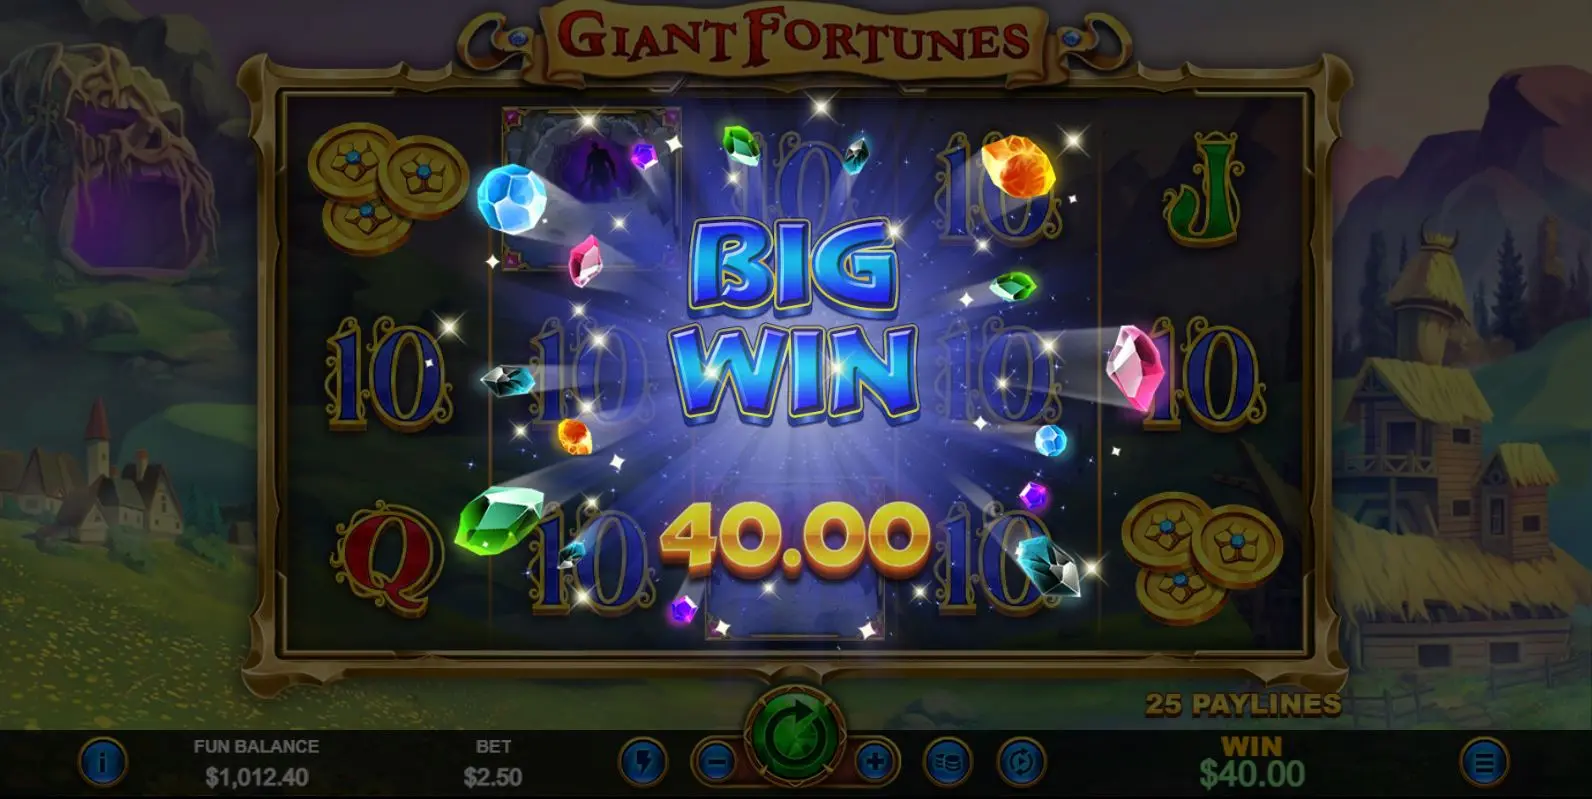 Giant Fortunes big win